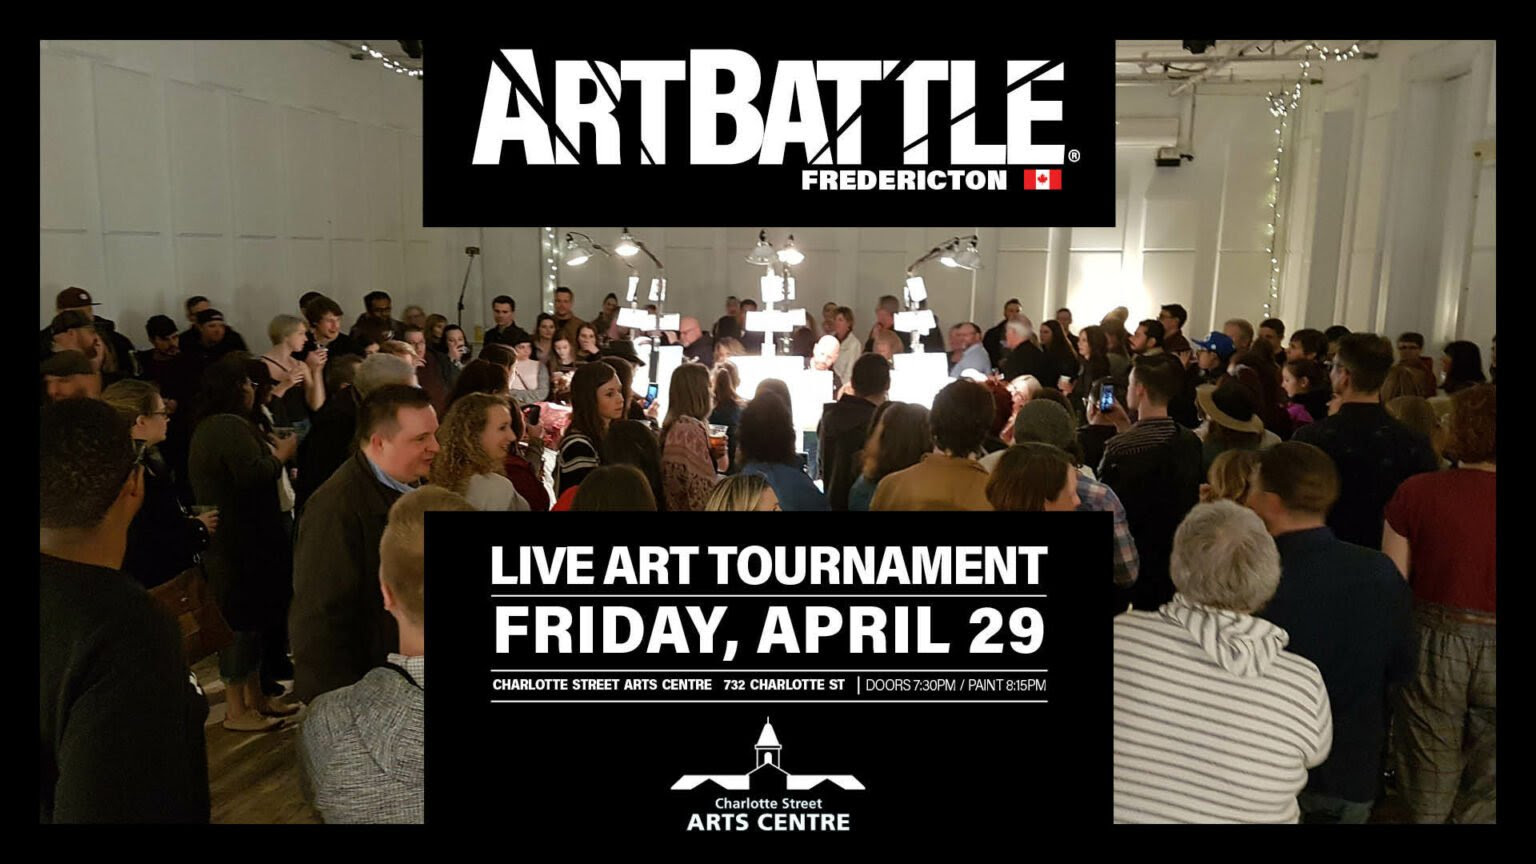 Art Battle Fredericton, Live Art Tournament, Friday, April 29